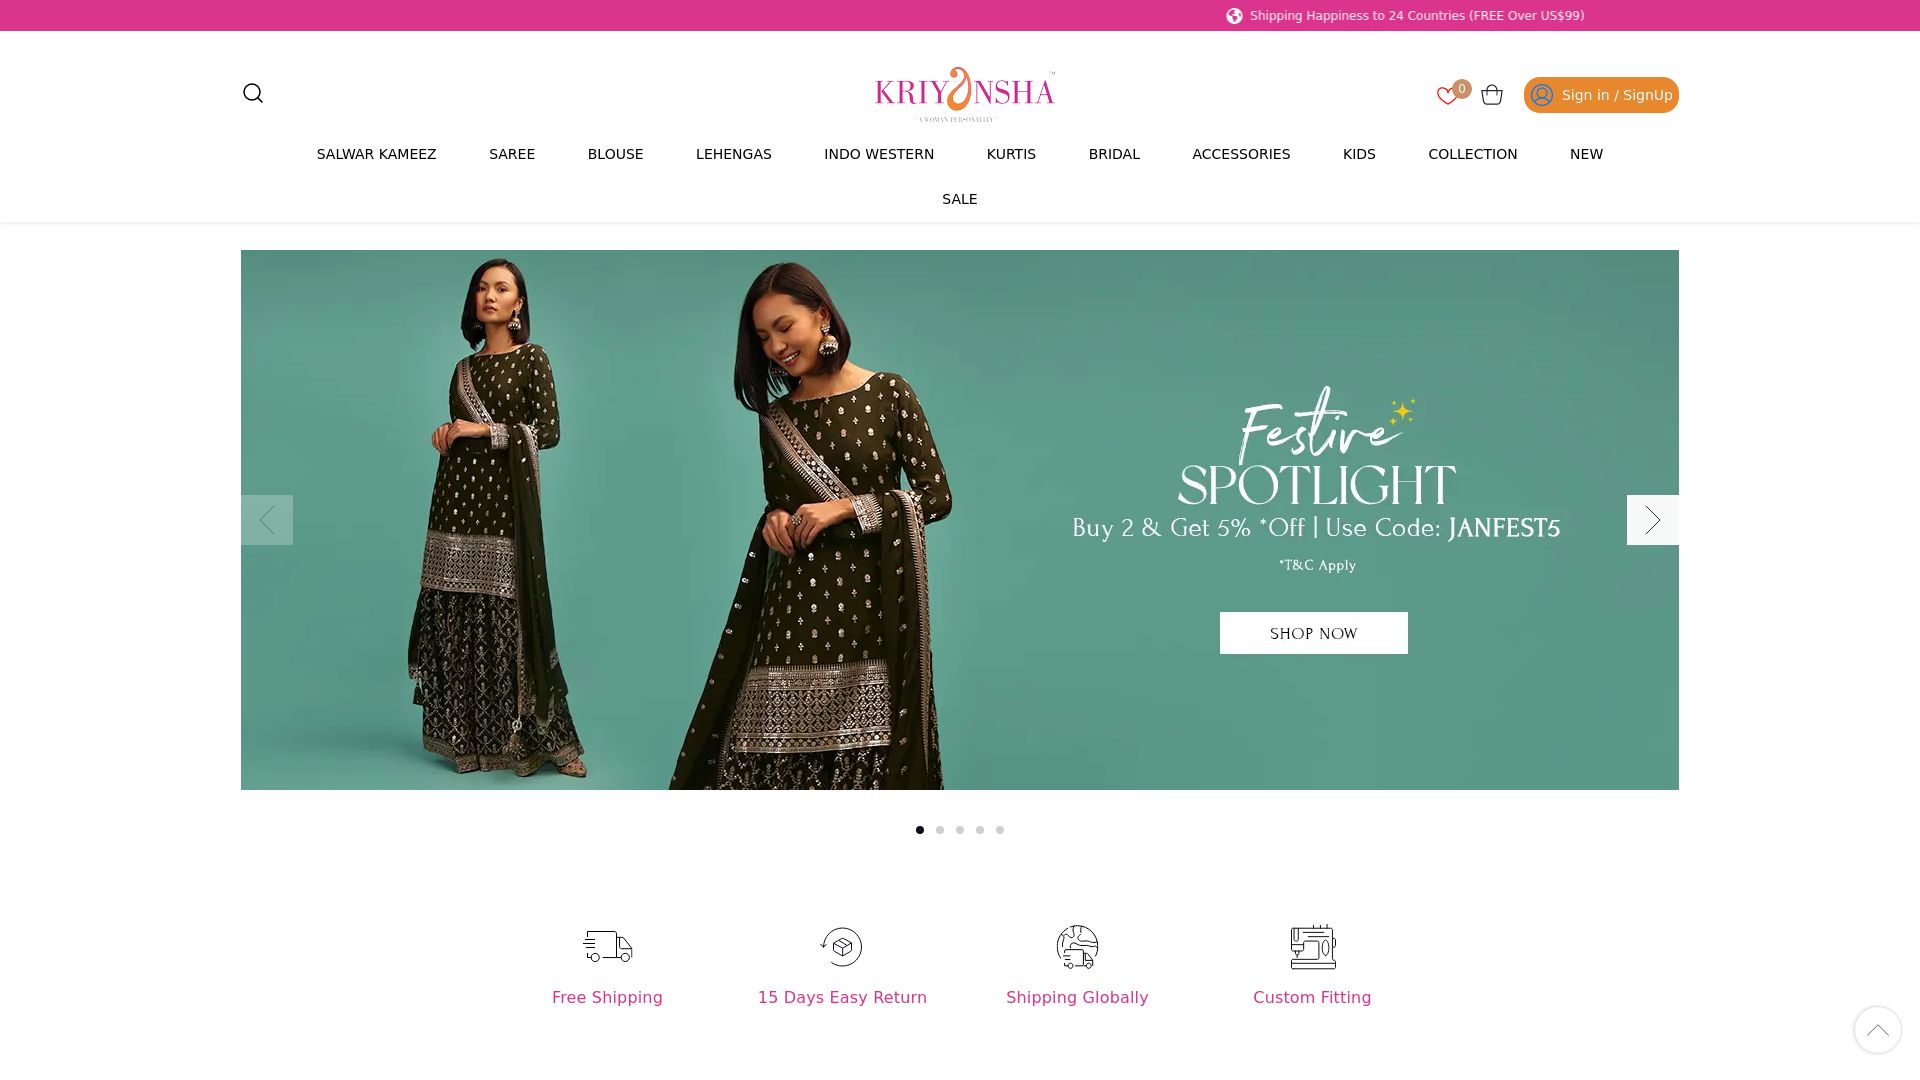 Website status kriyansha.com is   ONLINE